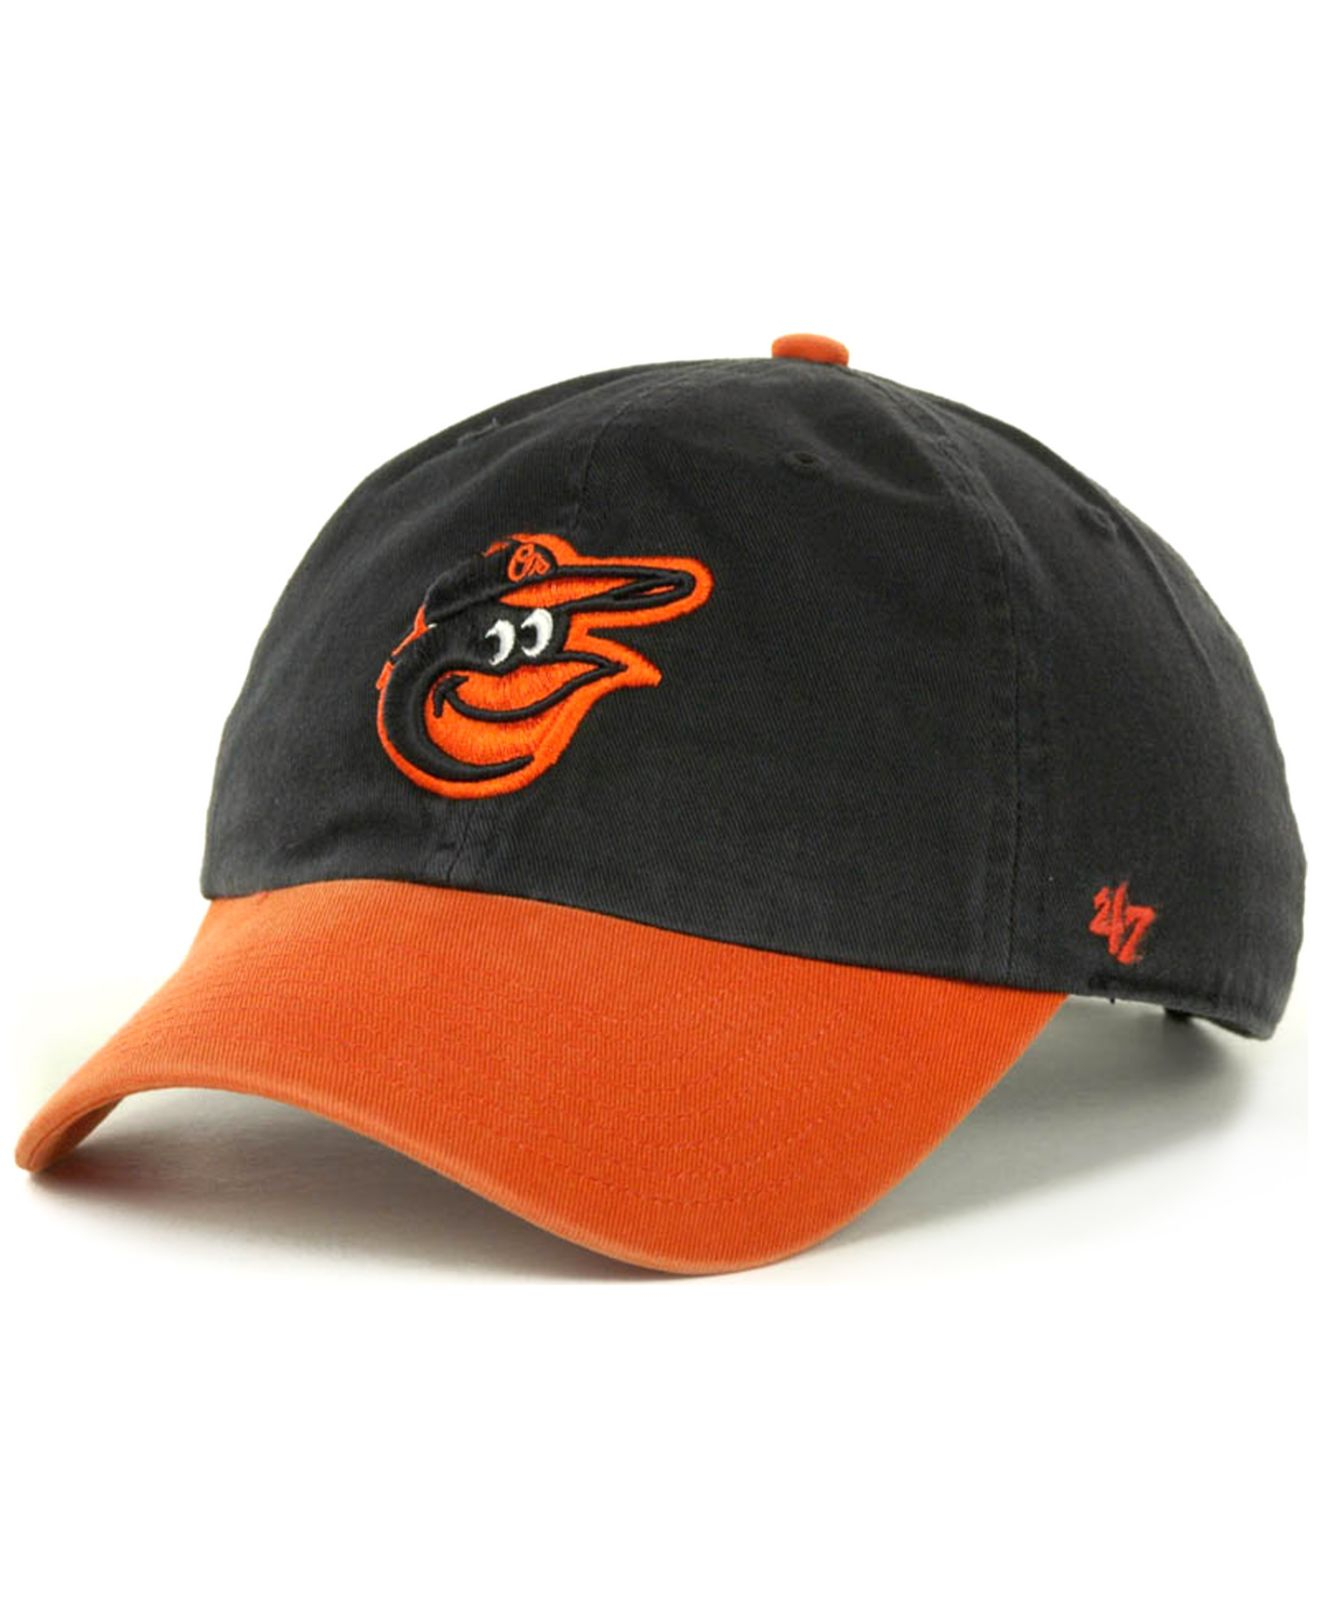 Lyst - 47 Brand Baltimore Orioles Clean Up Hat in Orange for Men